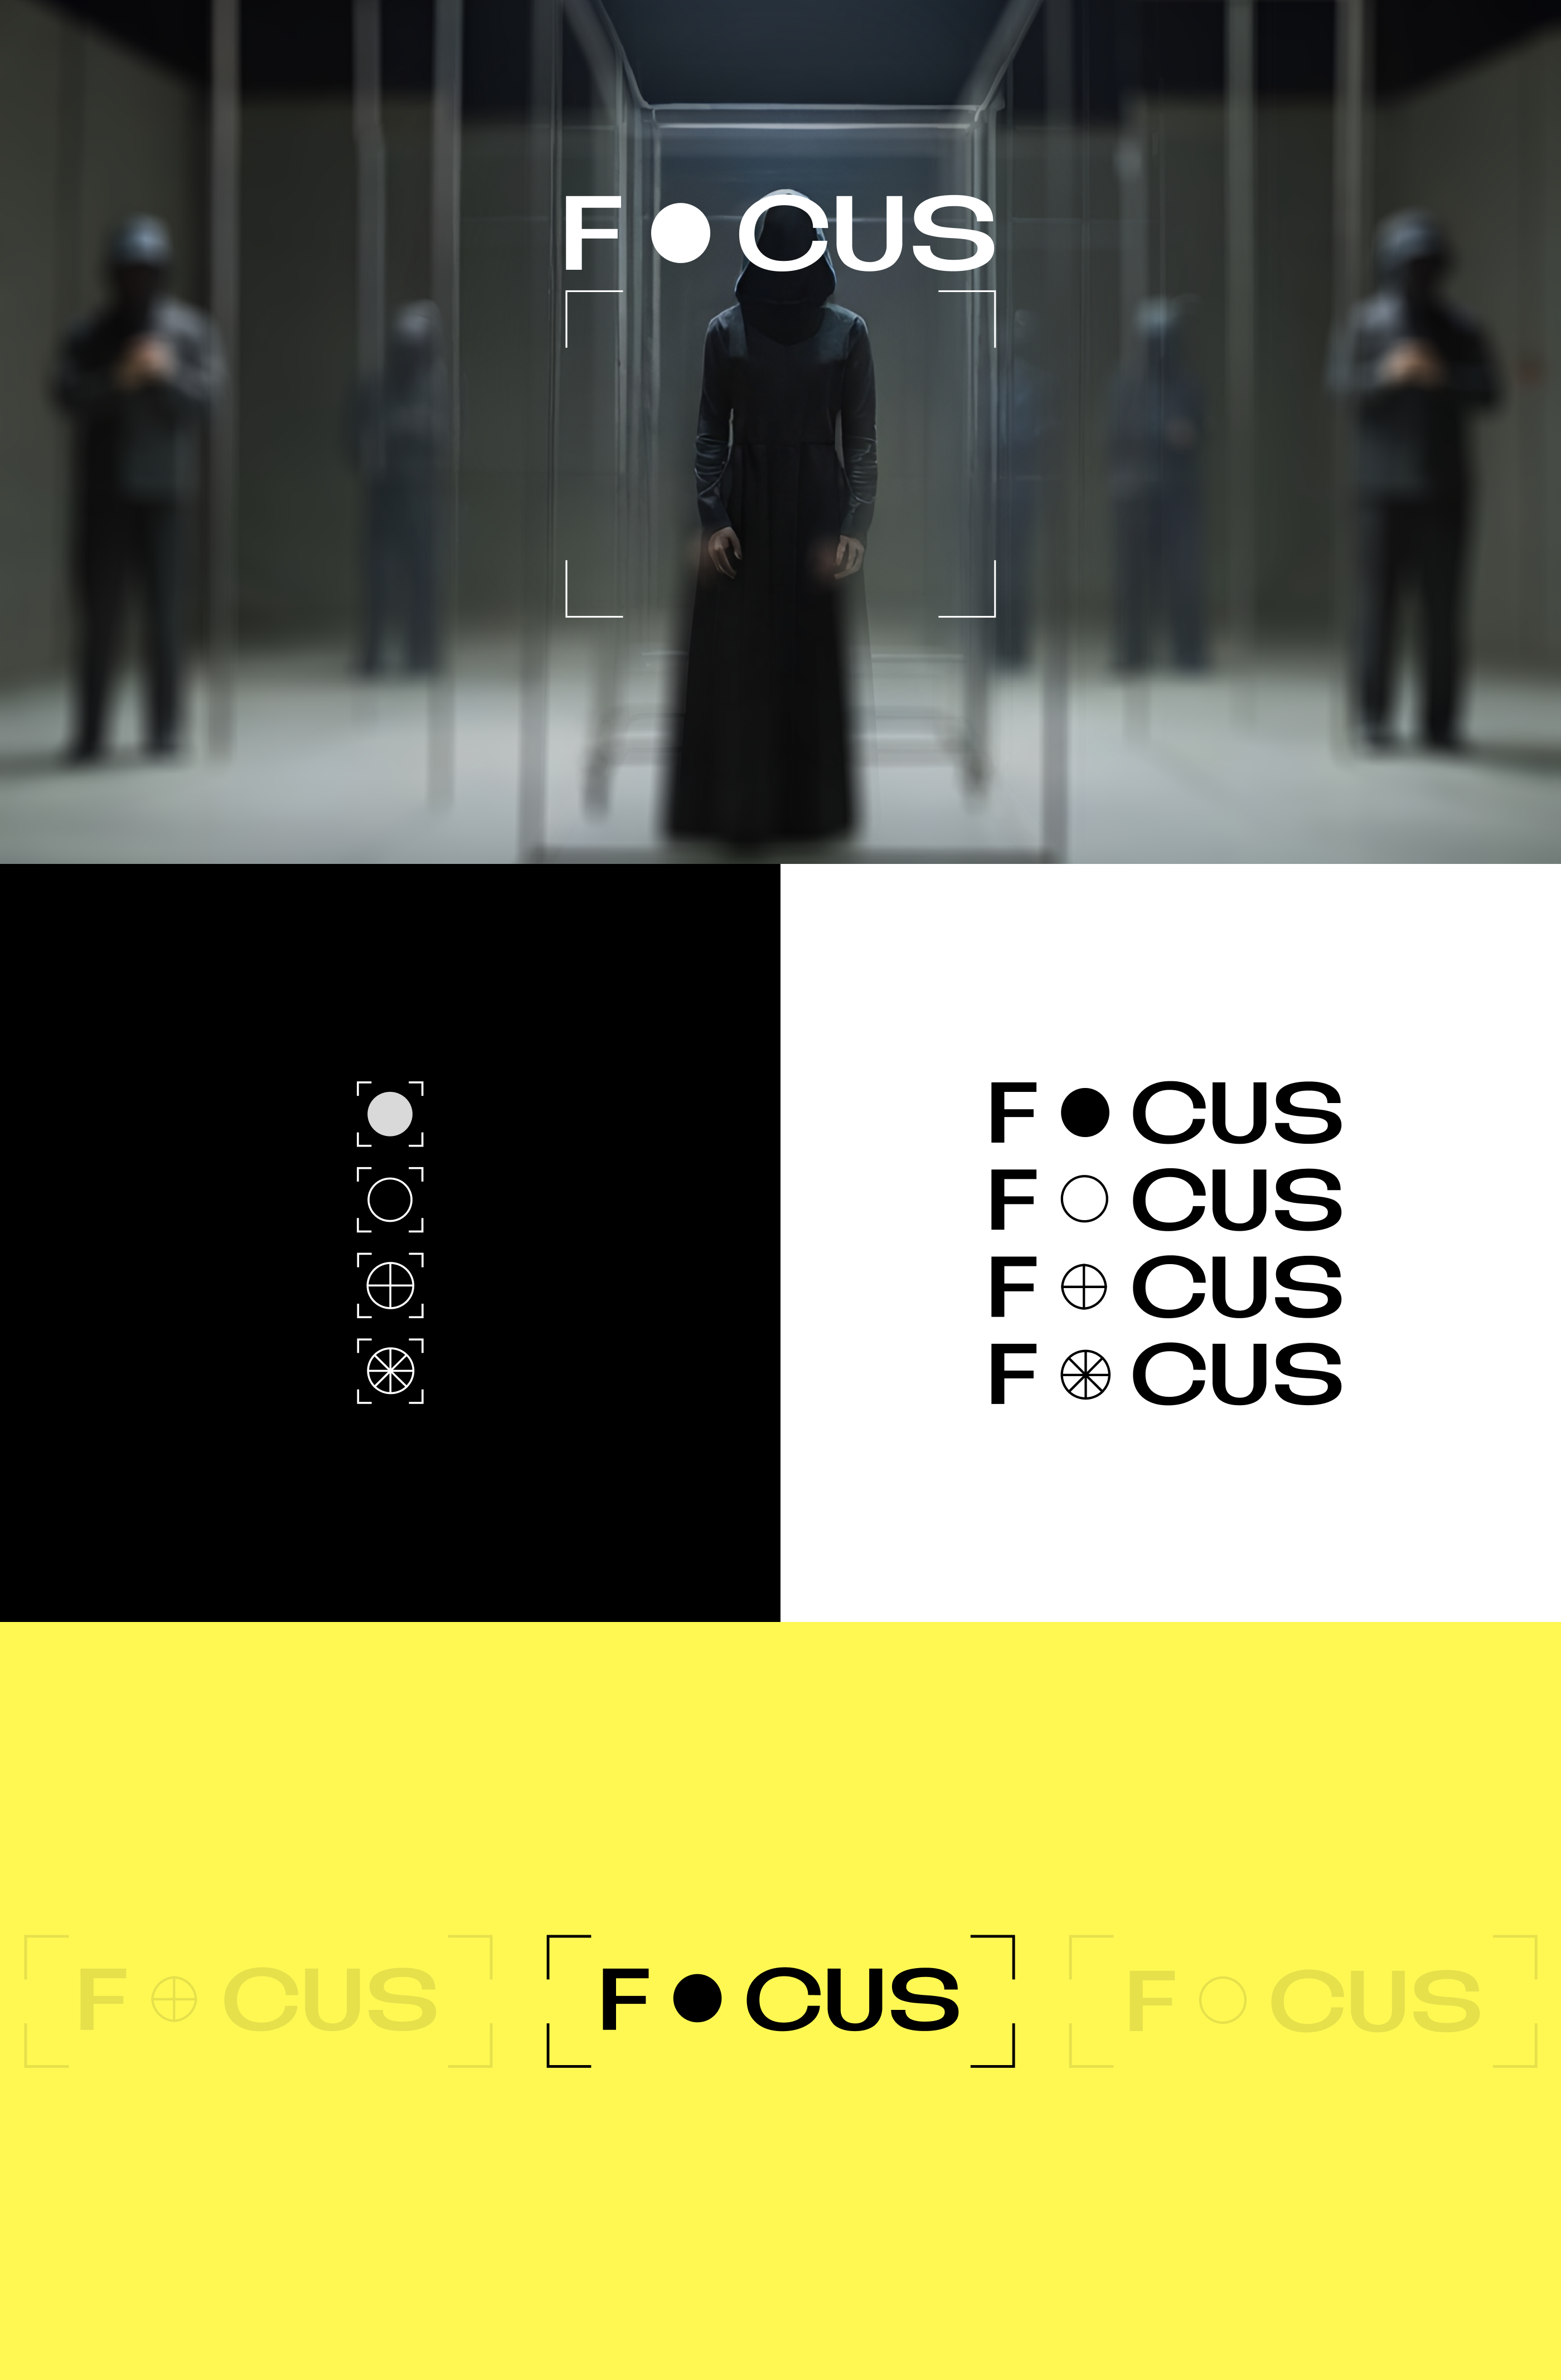 Focus — Изображение №3 — Интерфейсы, Брендинг на Dprofile